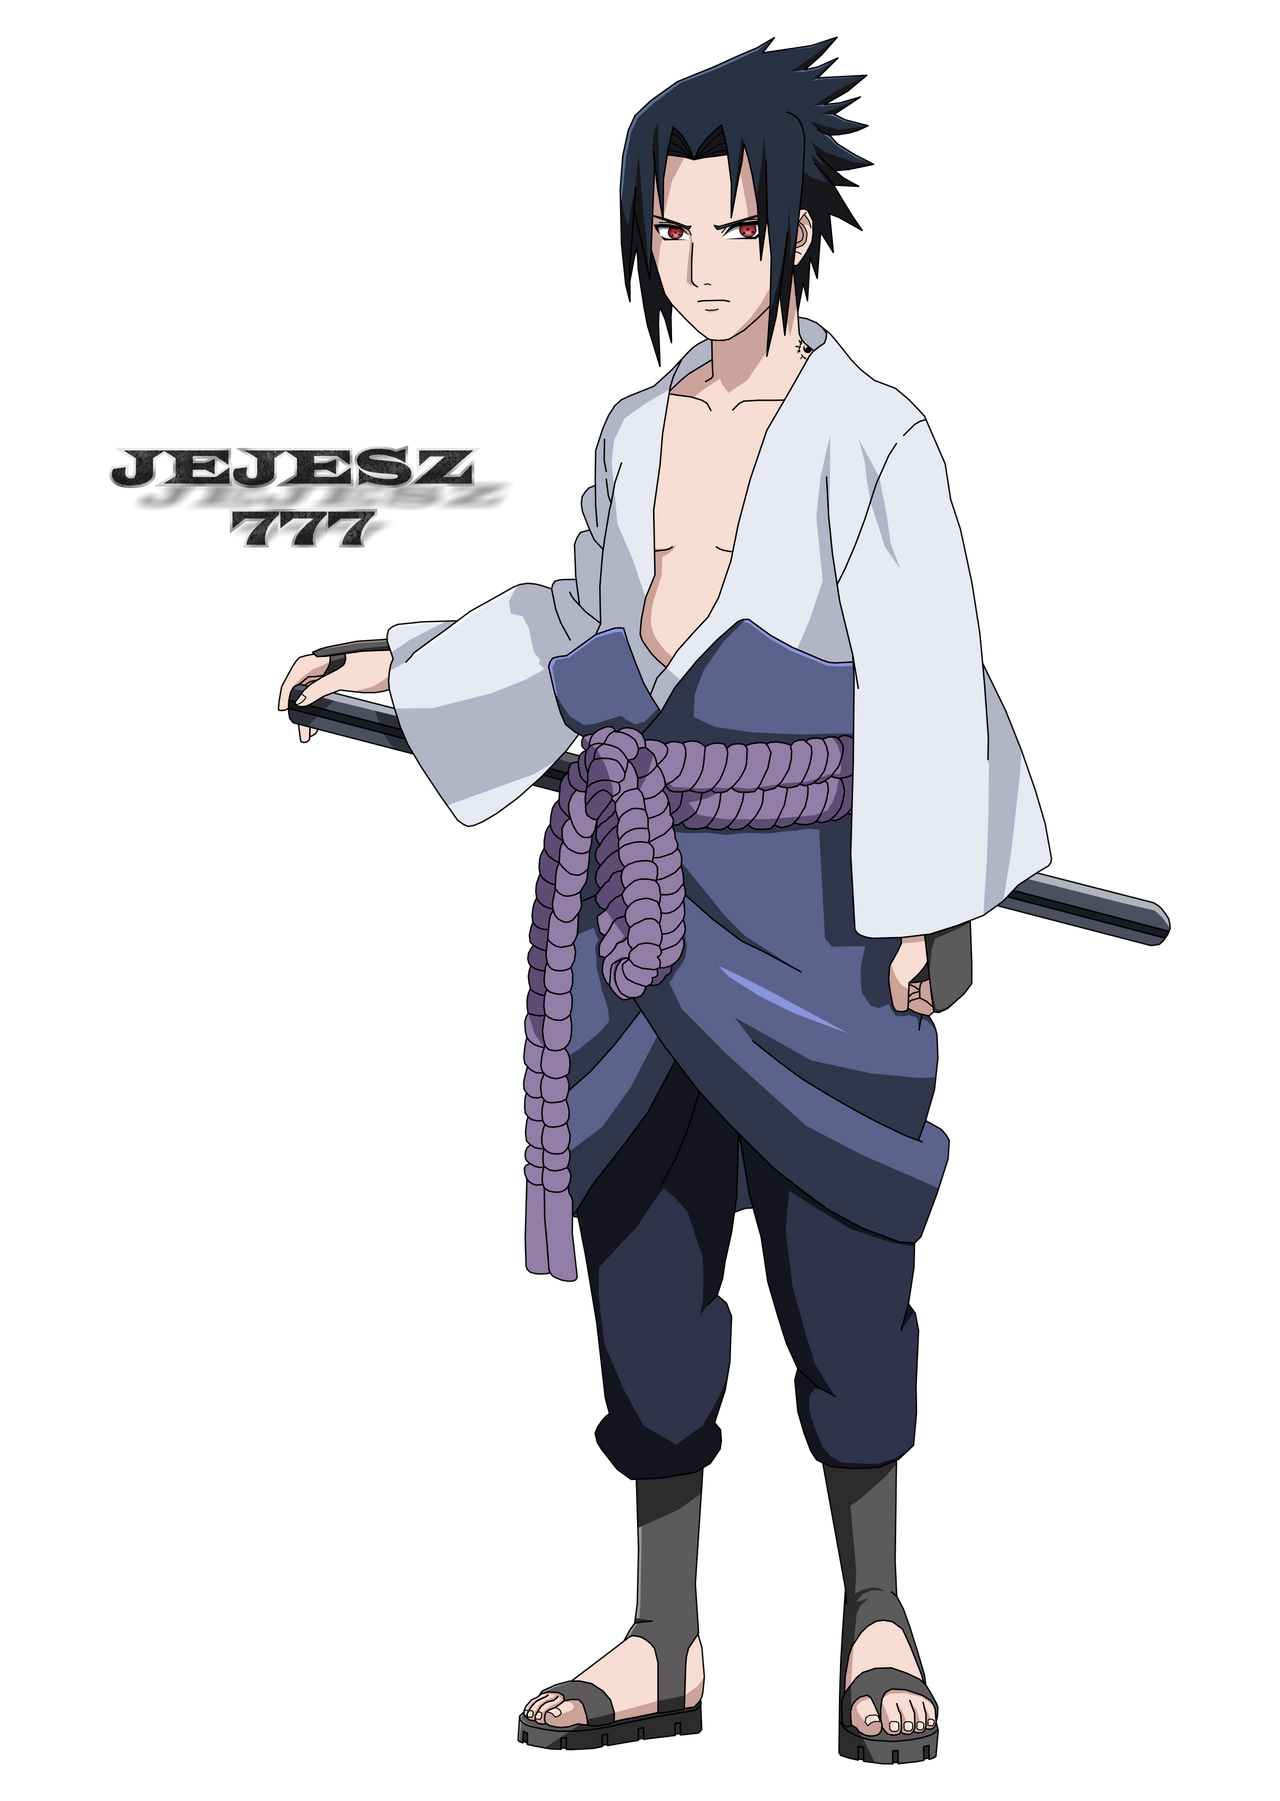 Boruto: Naruto Next GenerationsBoruto Uzumaki by JEJESZ777 on DeviantArt